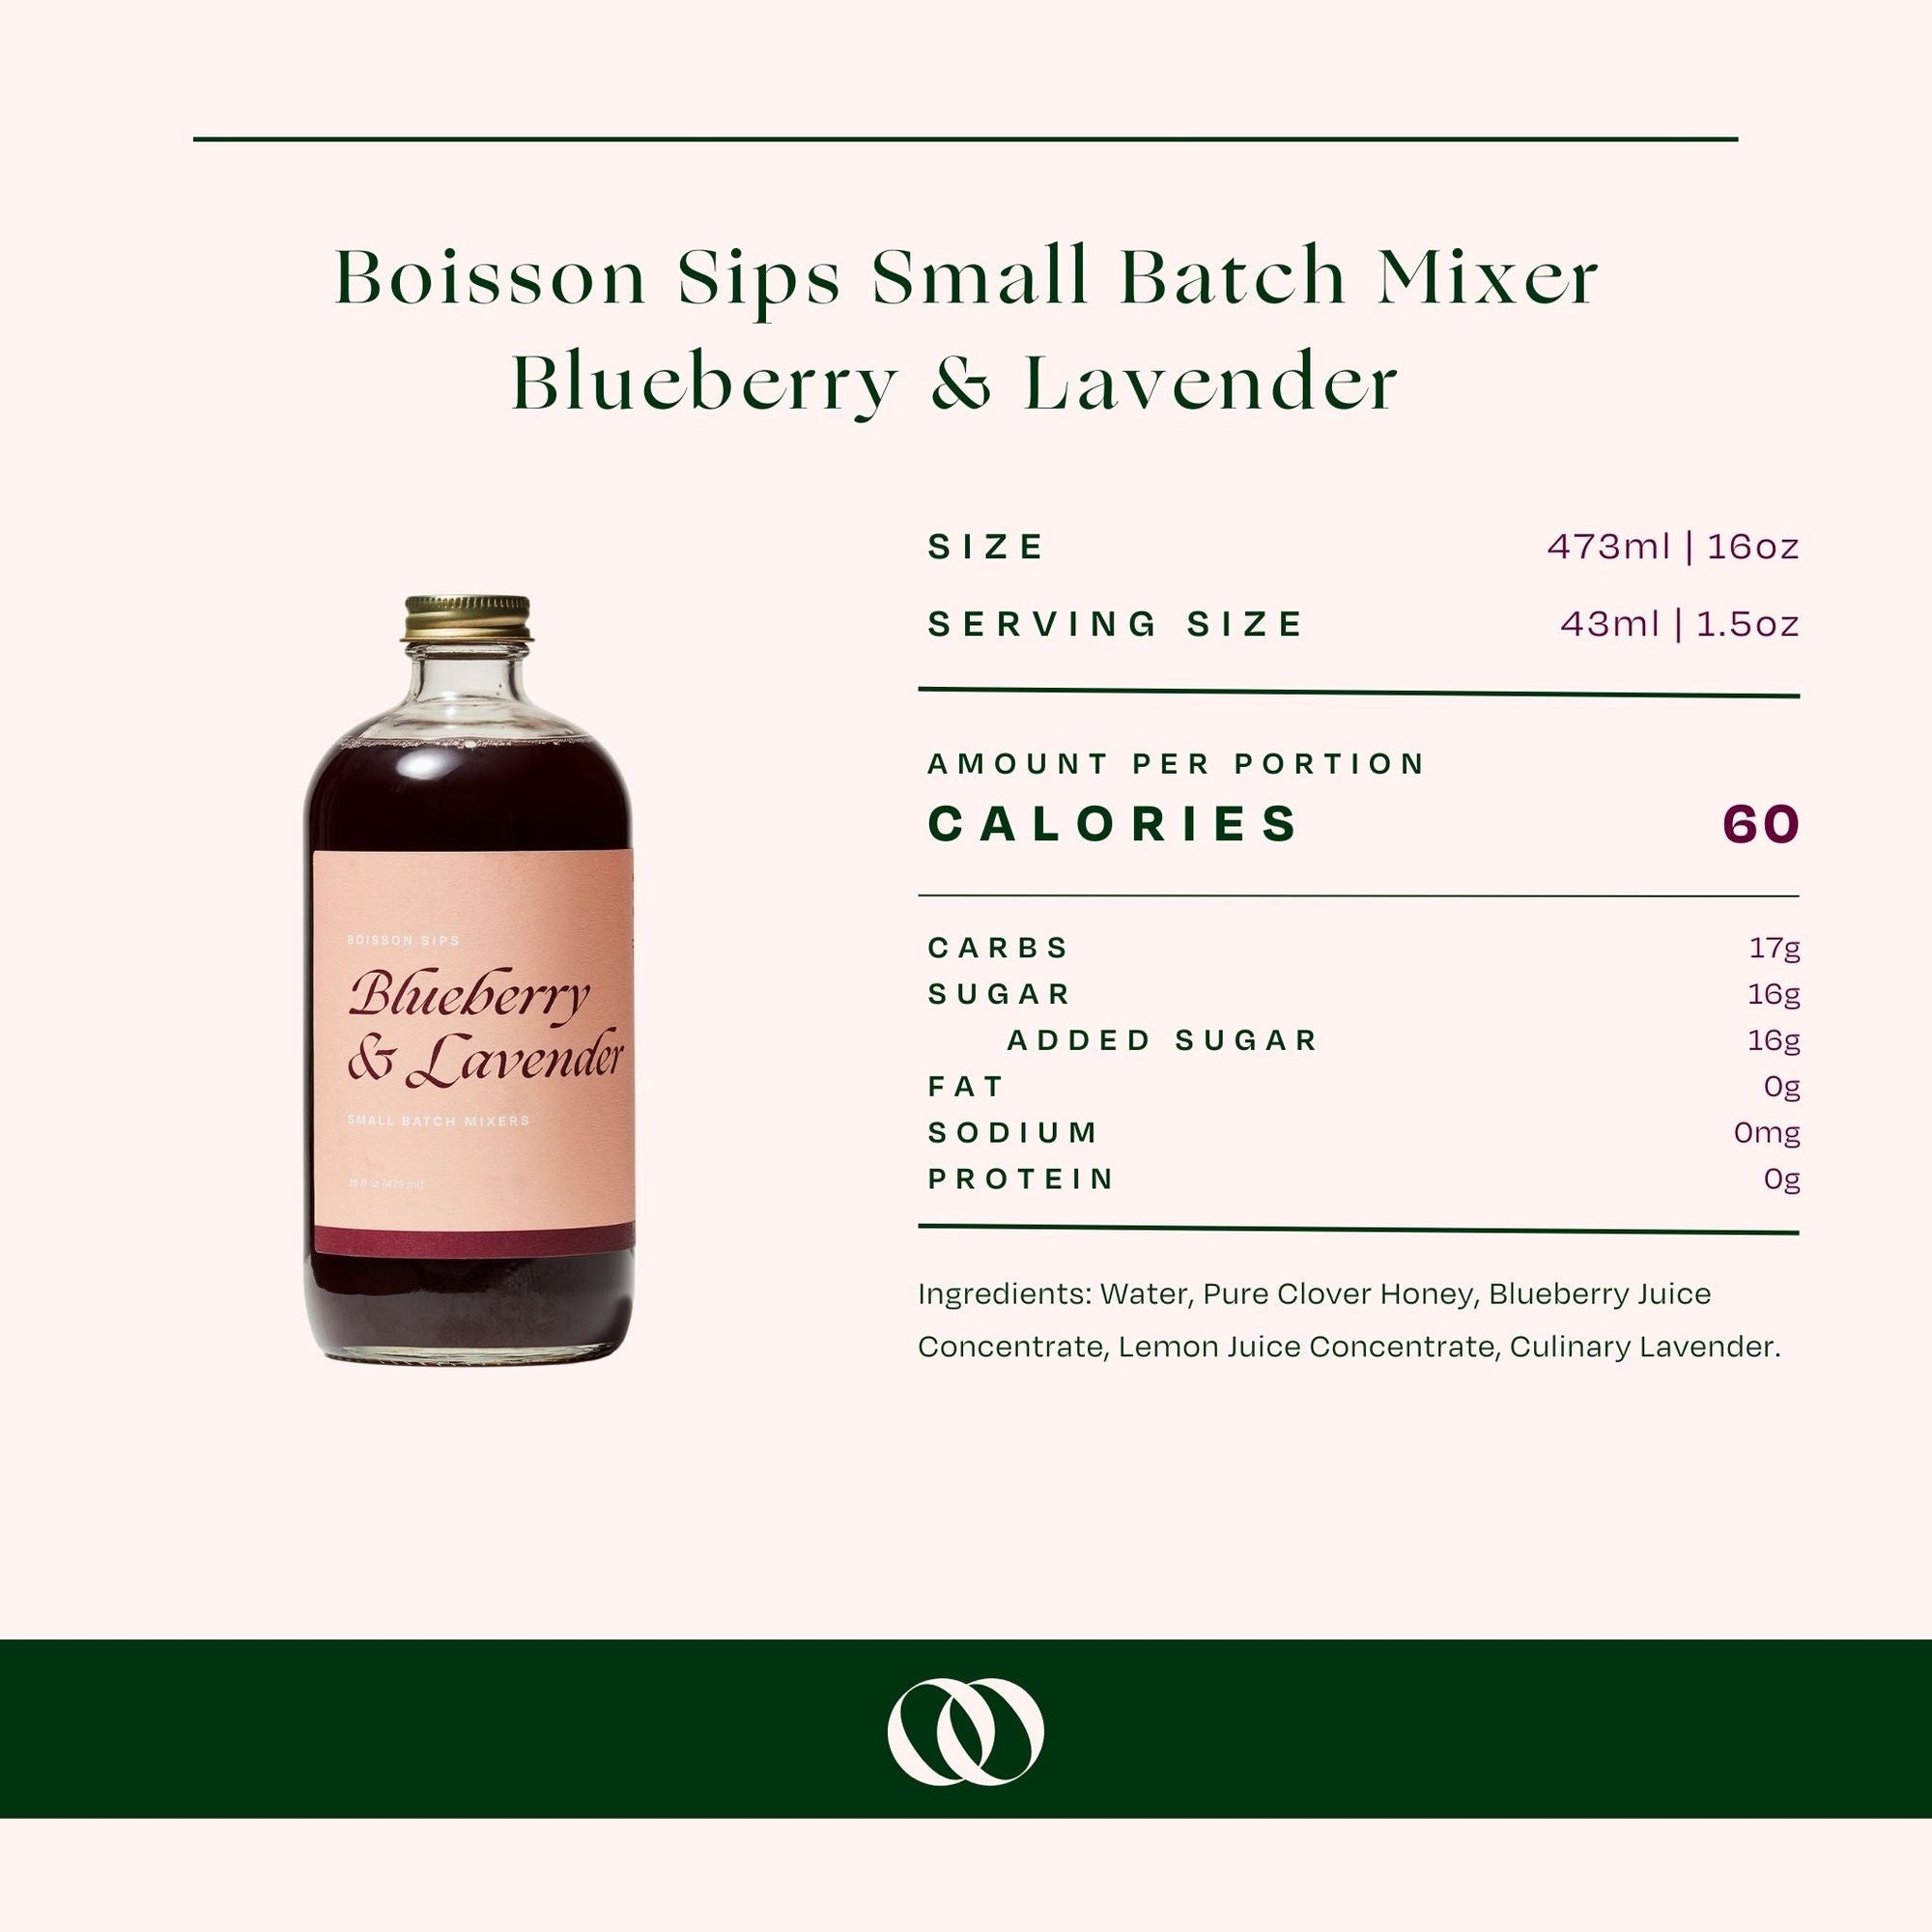 Wood Stove Kitchen - Boisson Sips Blueberry & Lavender Small Batch Mixers - Boisson